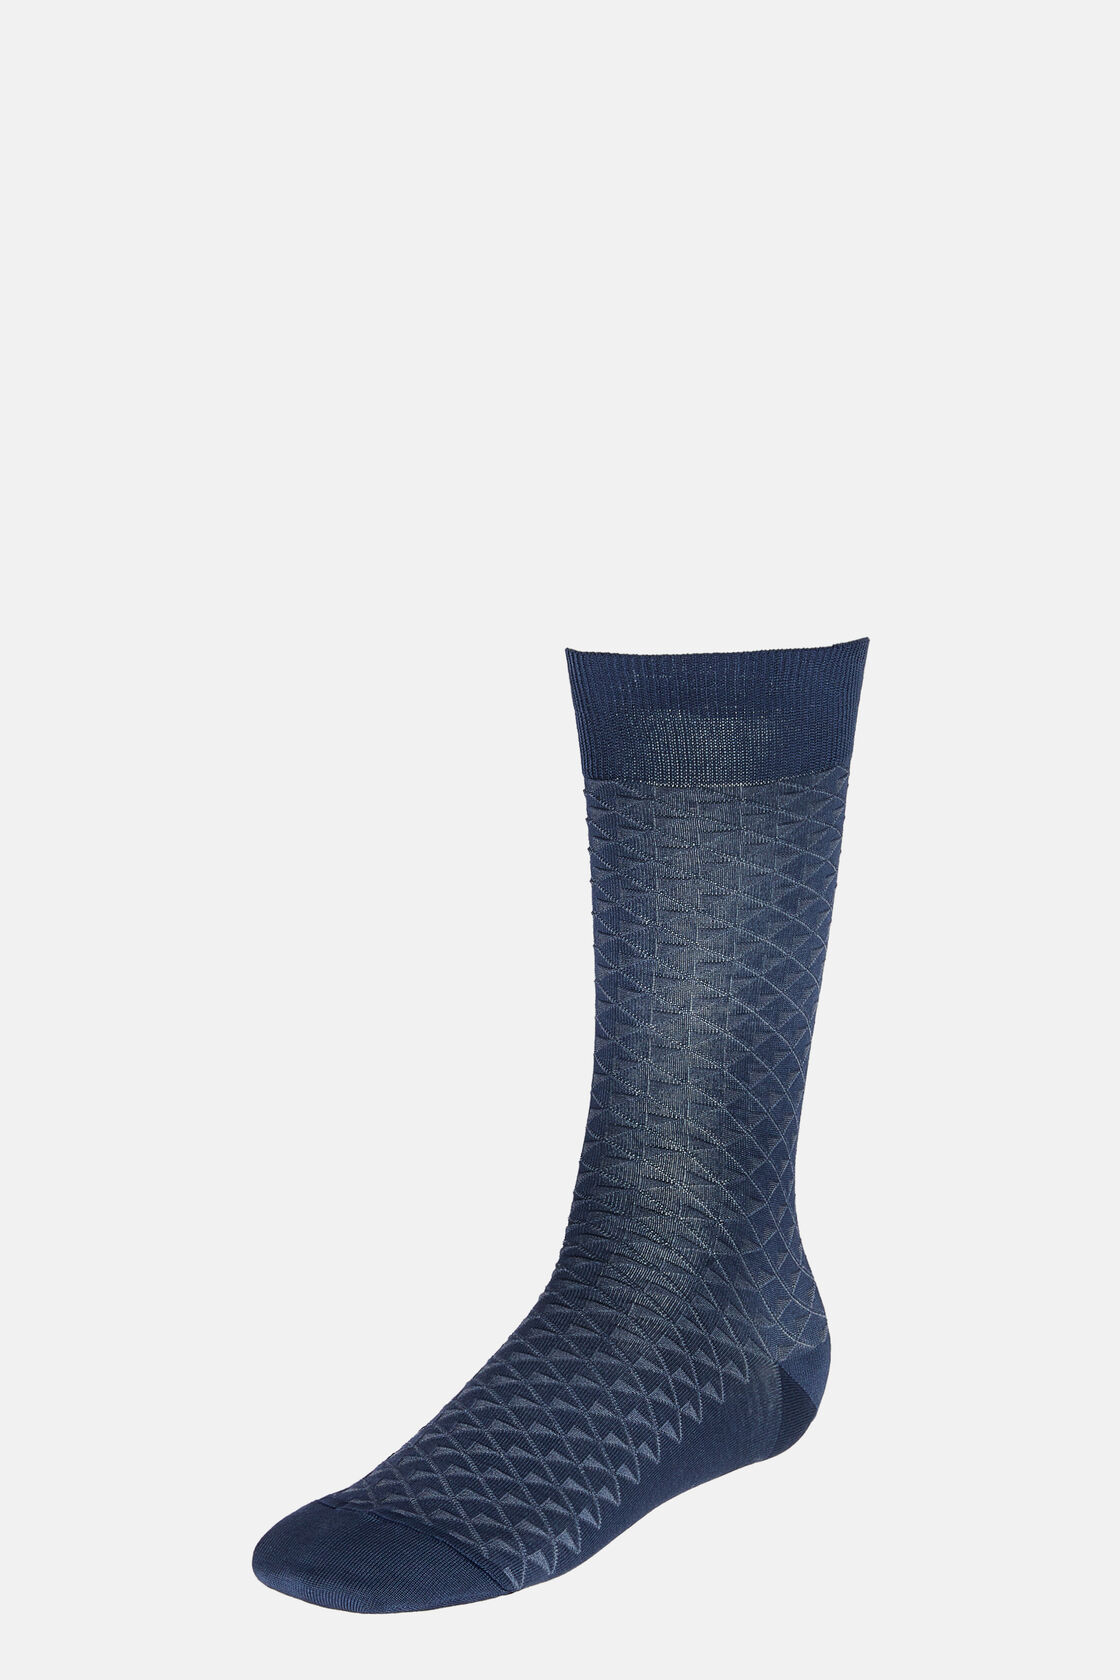 Jacquard-Socken aus Baumwollmischung, Air-blau, hi-res